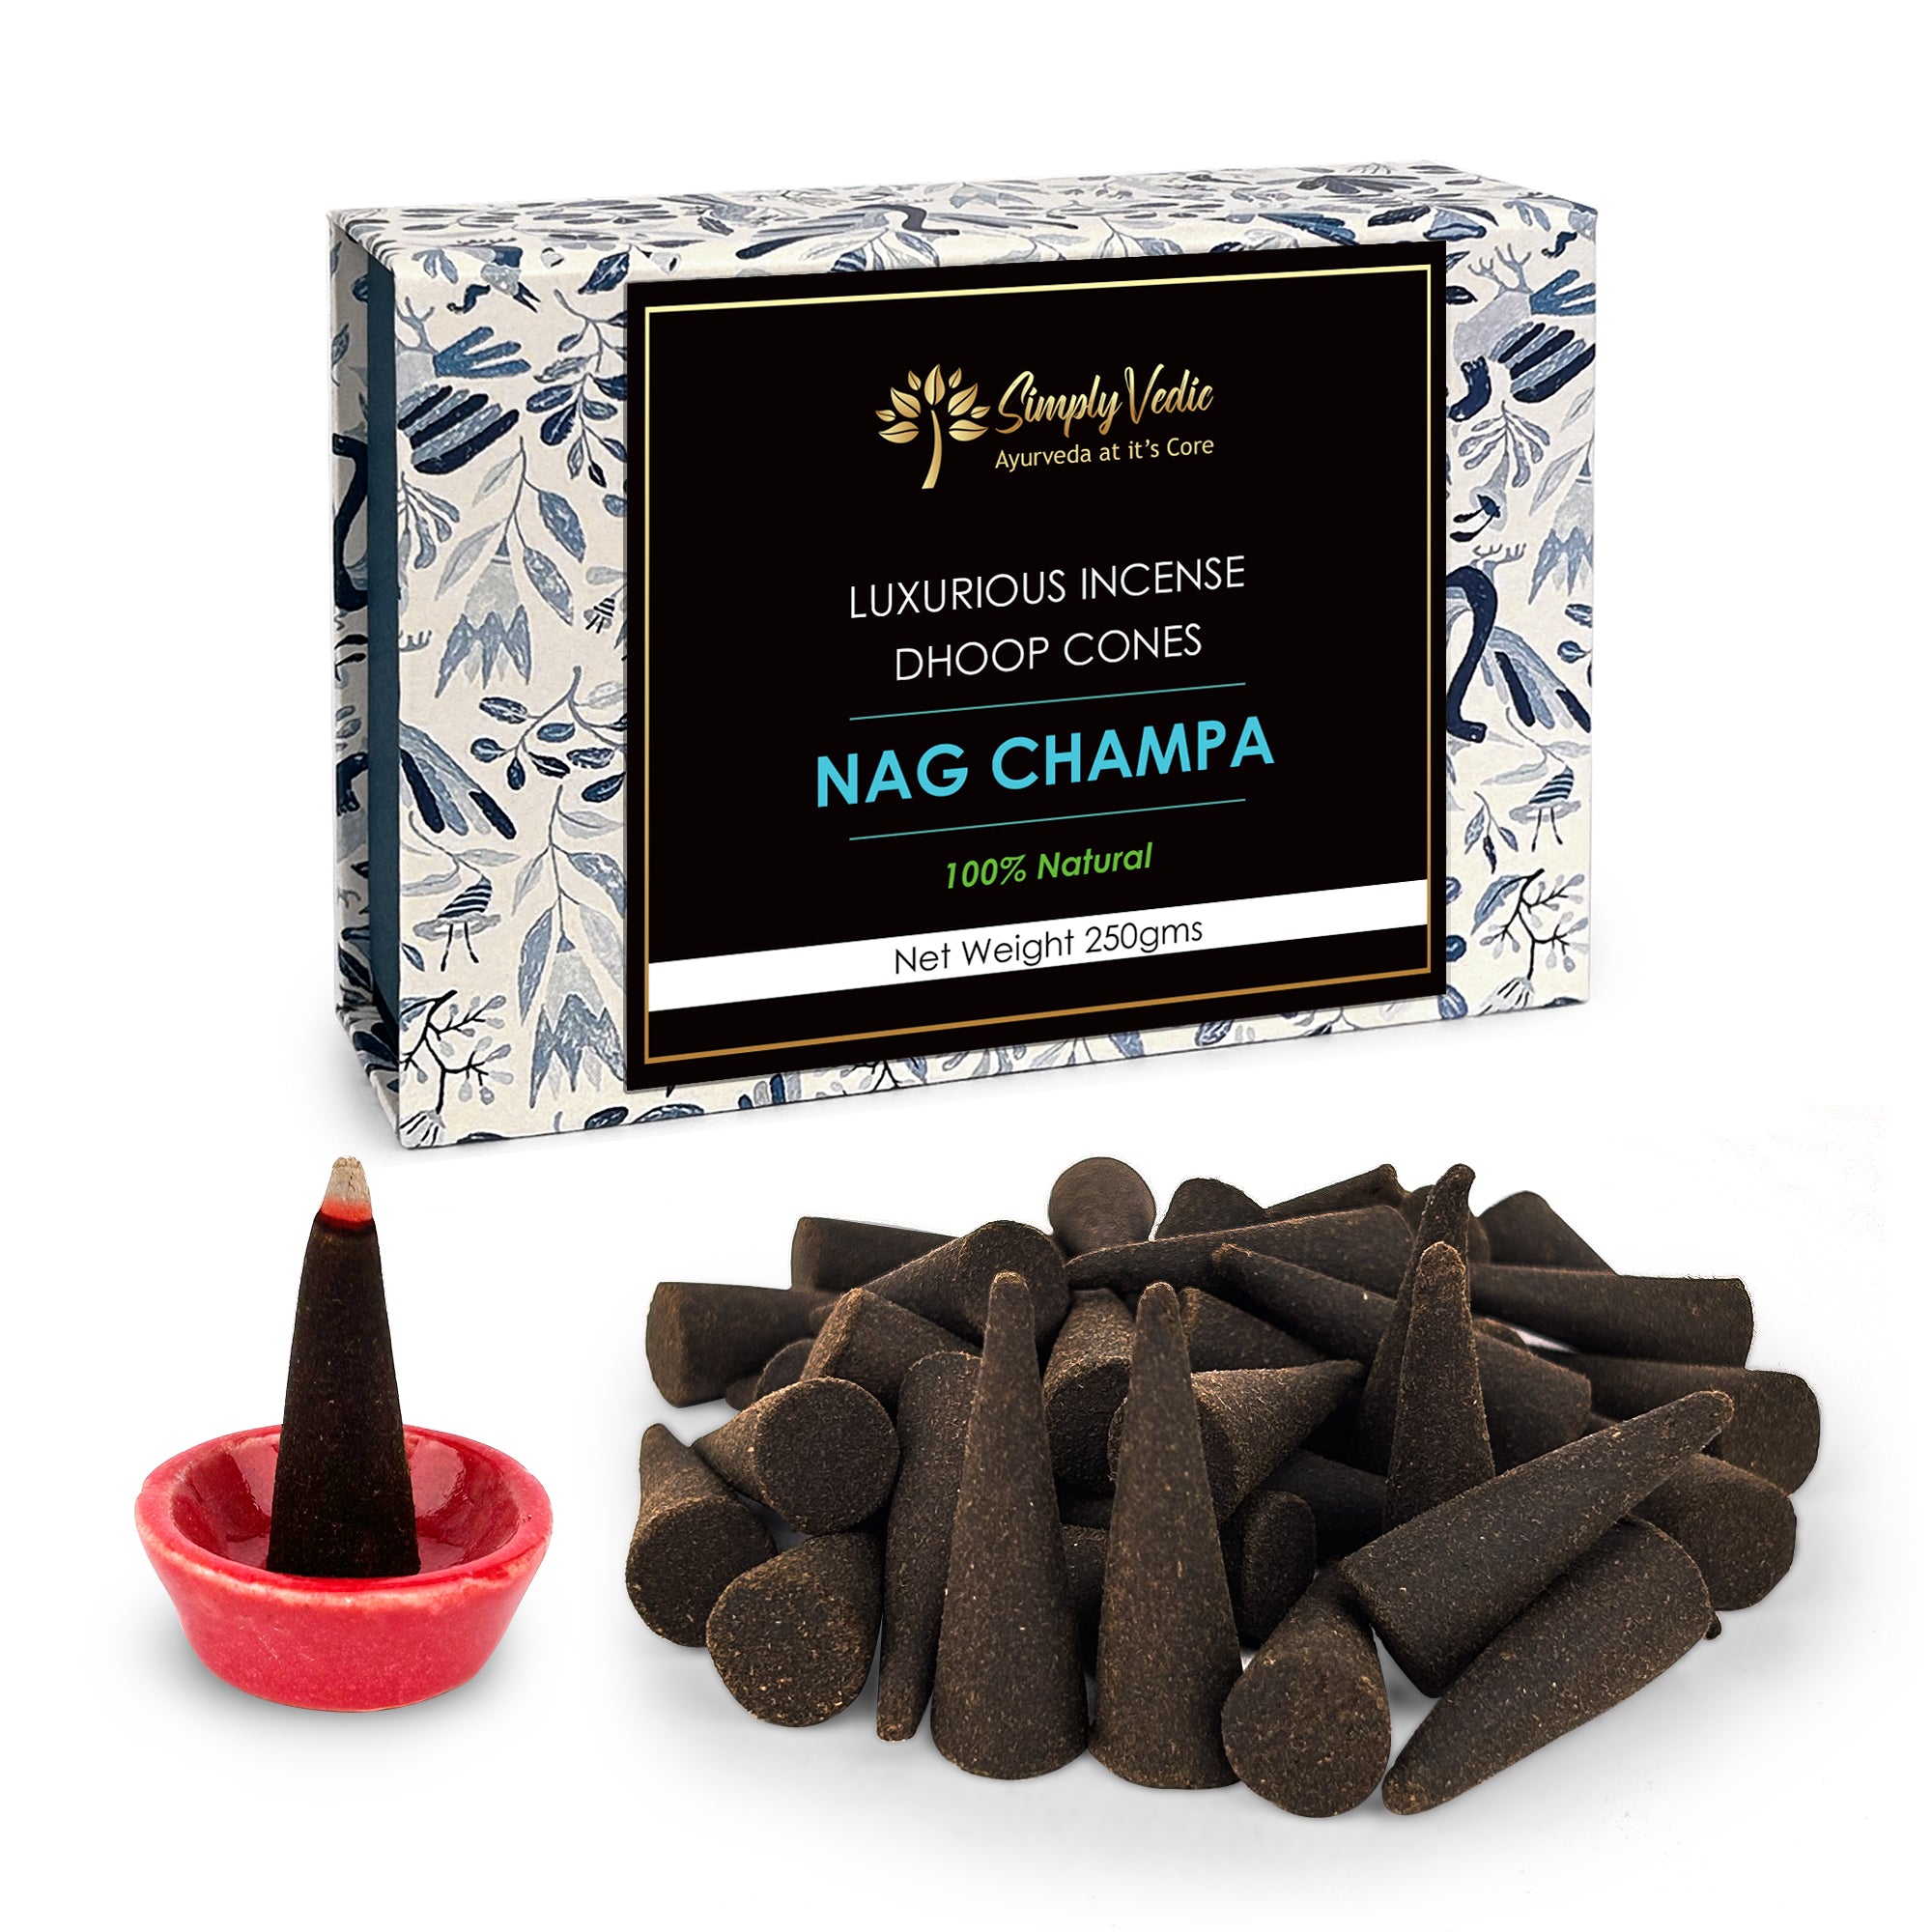 Simply Vedic's Nag Champa Incense Cones